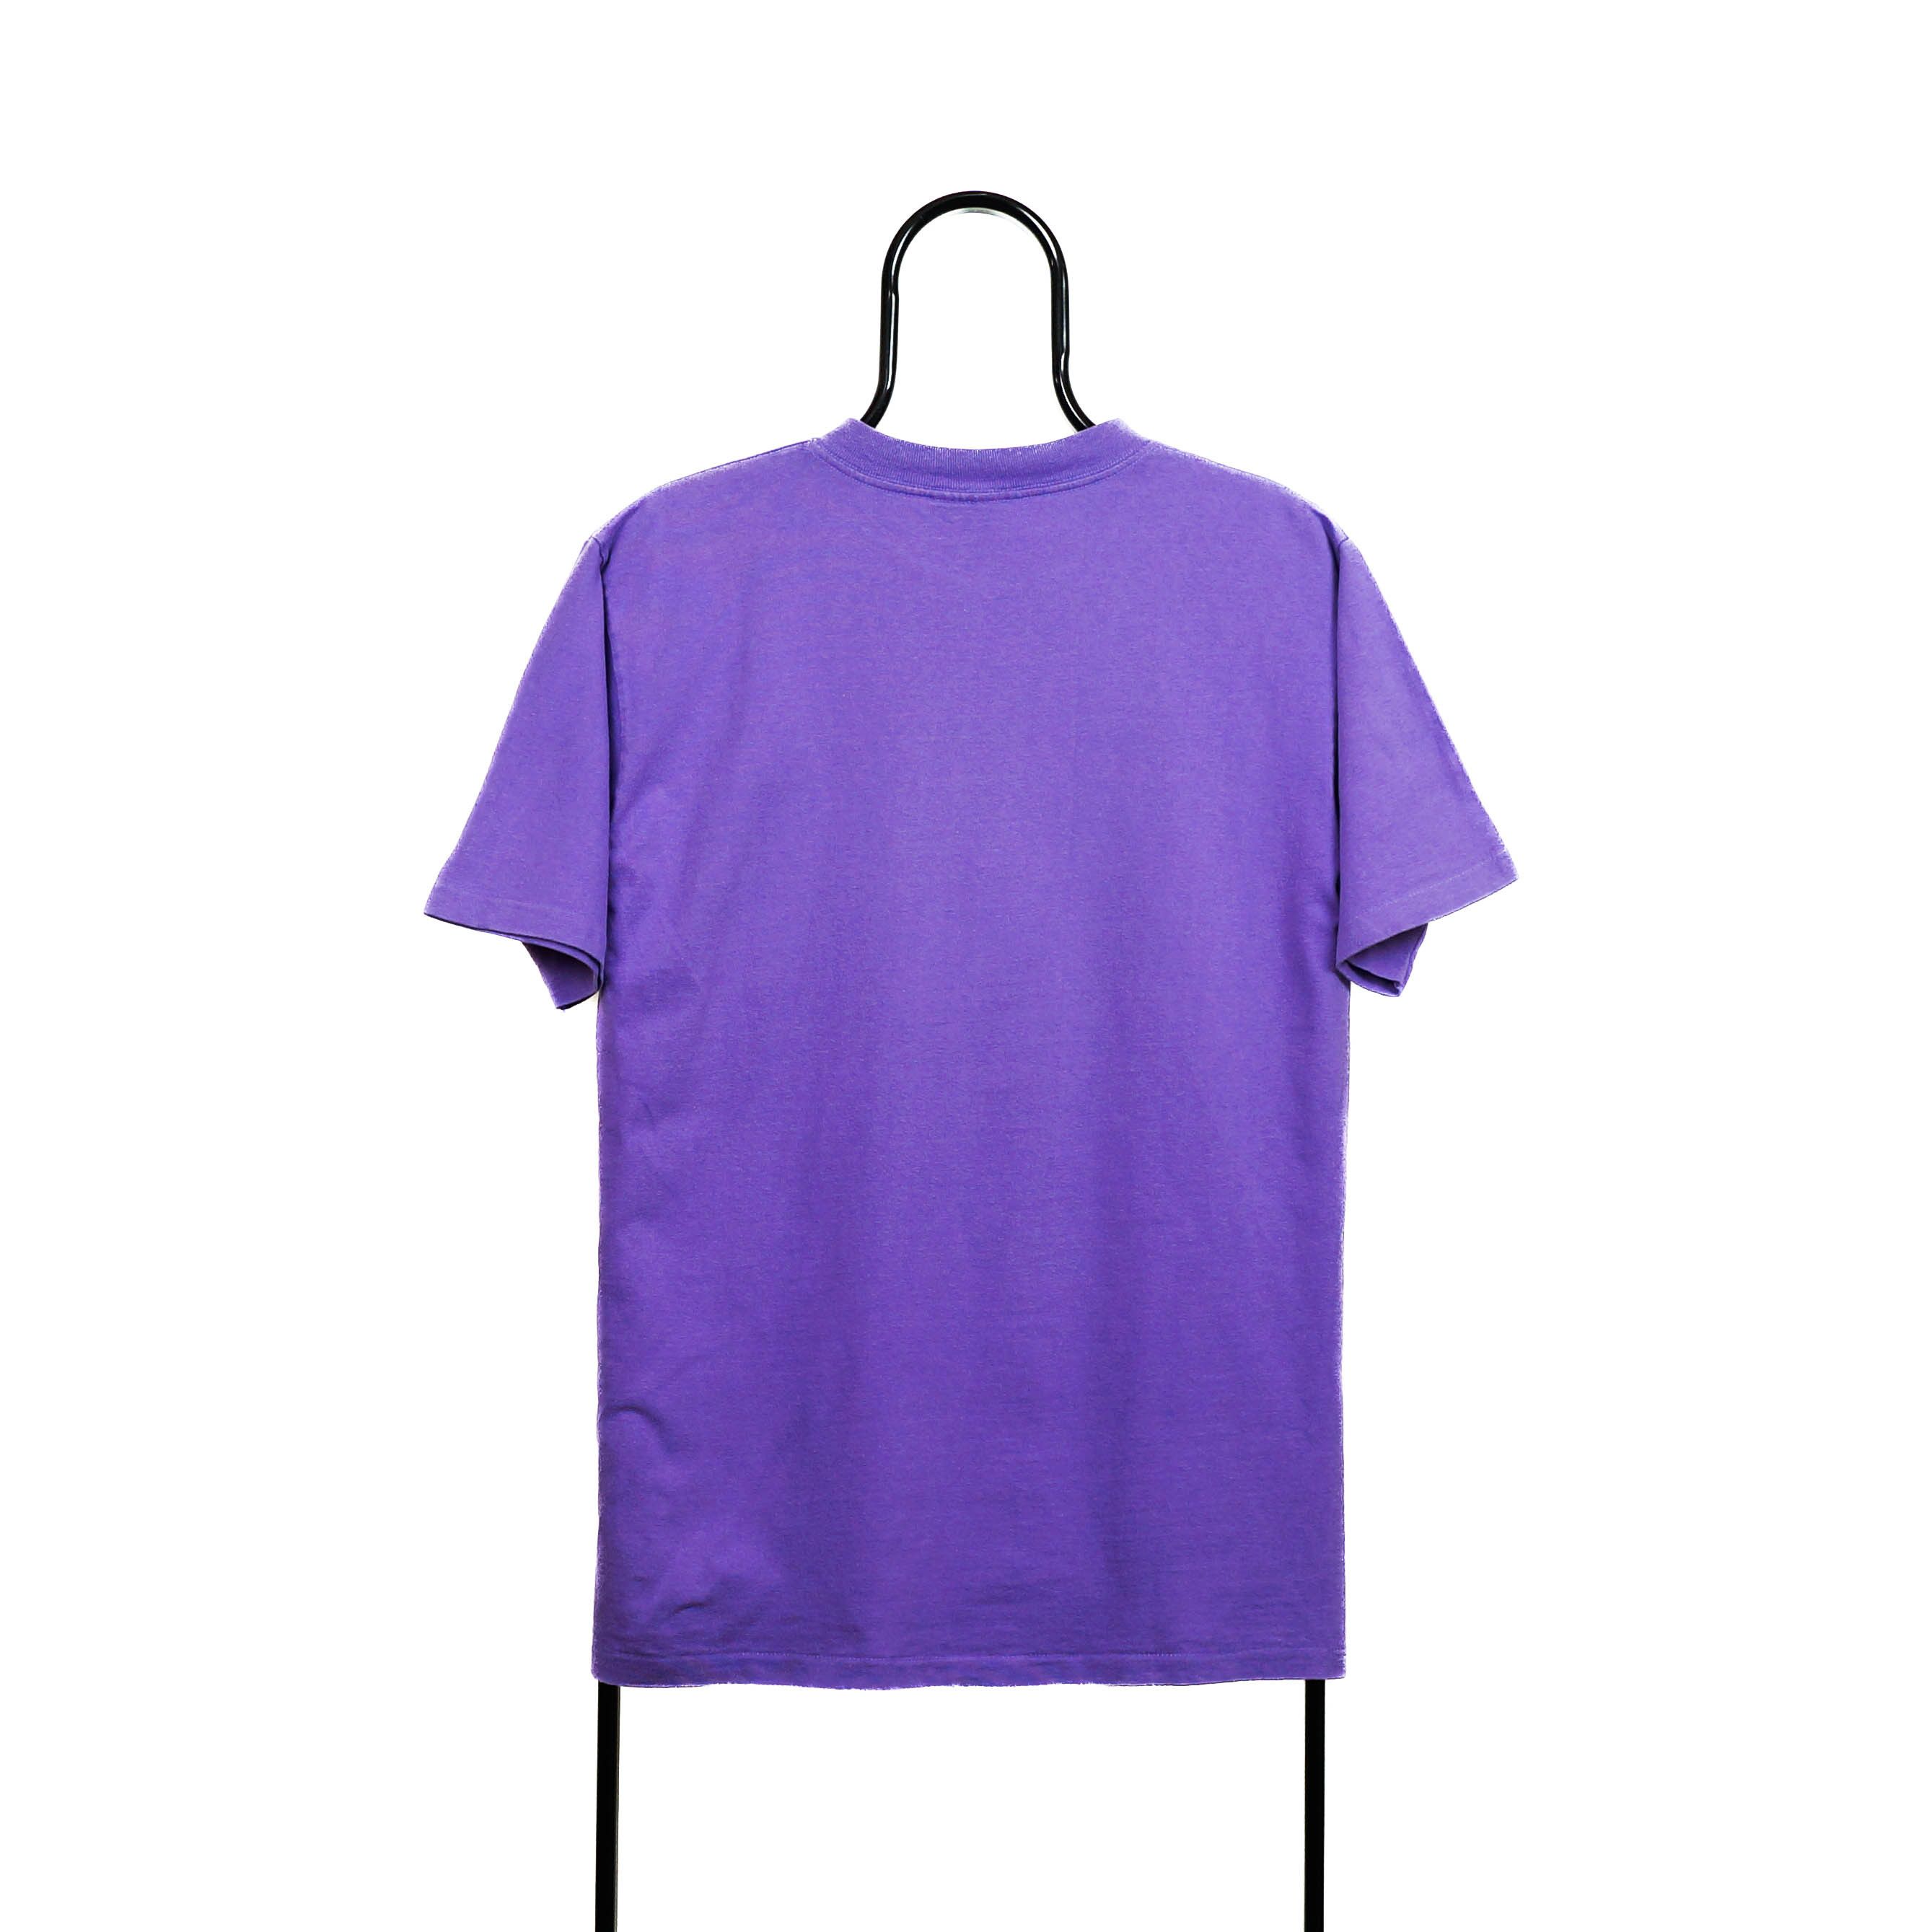 Vintage Vintage 1996 Olympic Games T-Shirt Purple New Atlanta 90s Size US L / EU 52-54 / 3 - 7 Preview